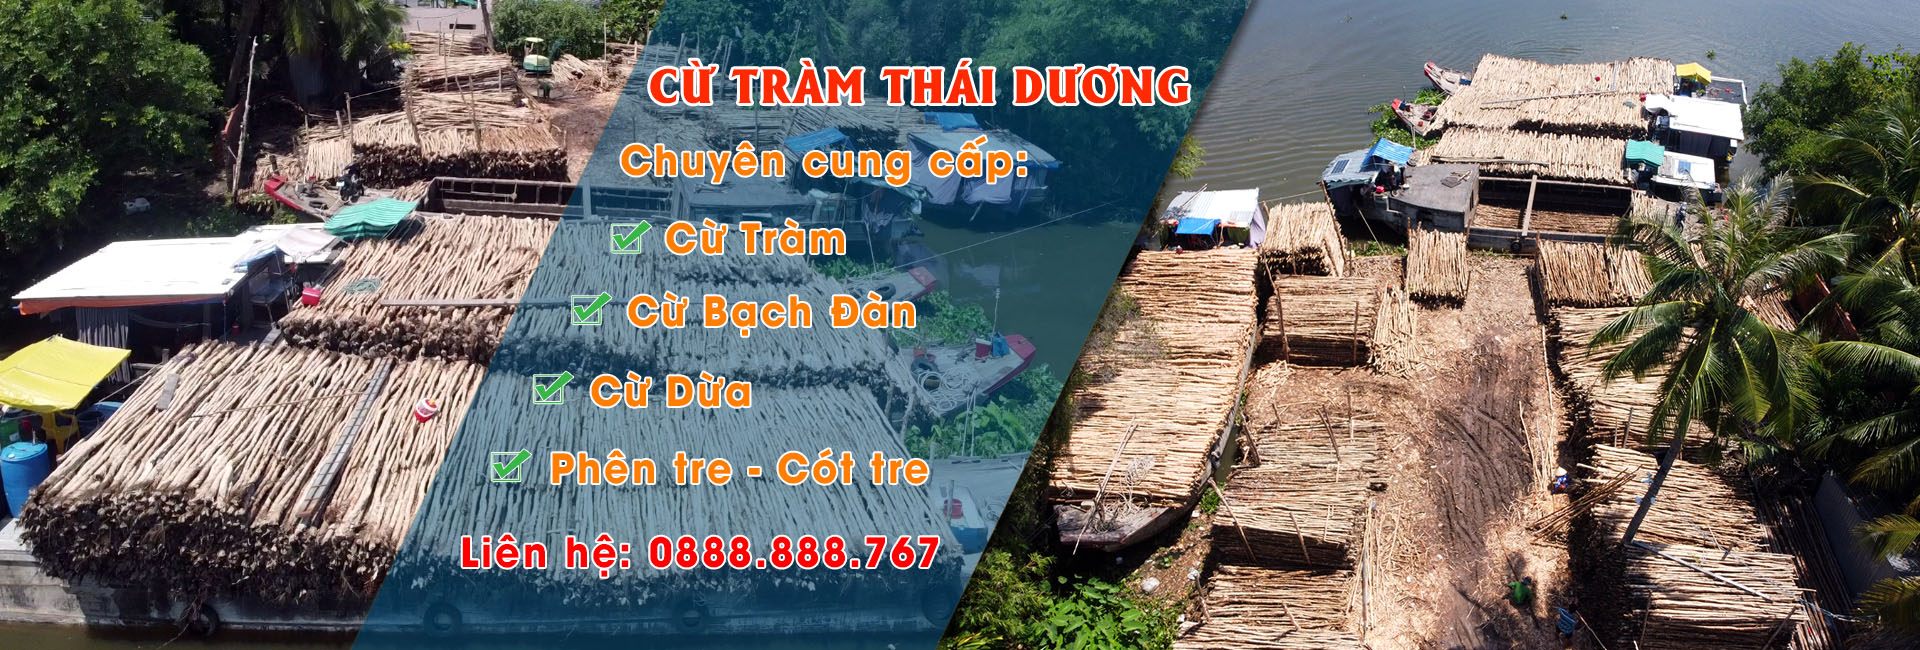 Slide cu tram thai duong 01